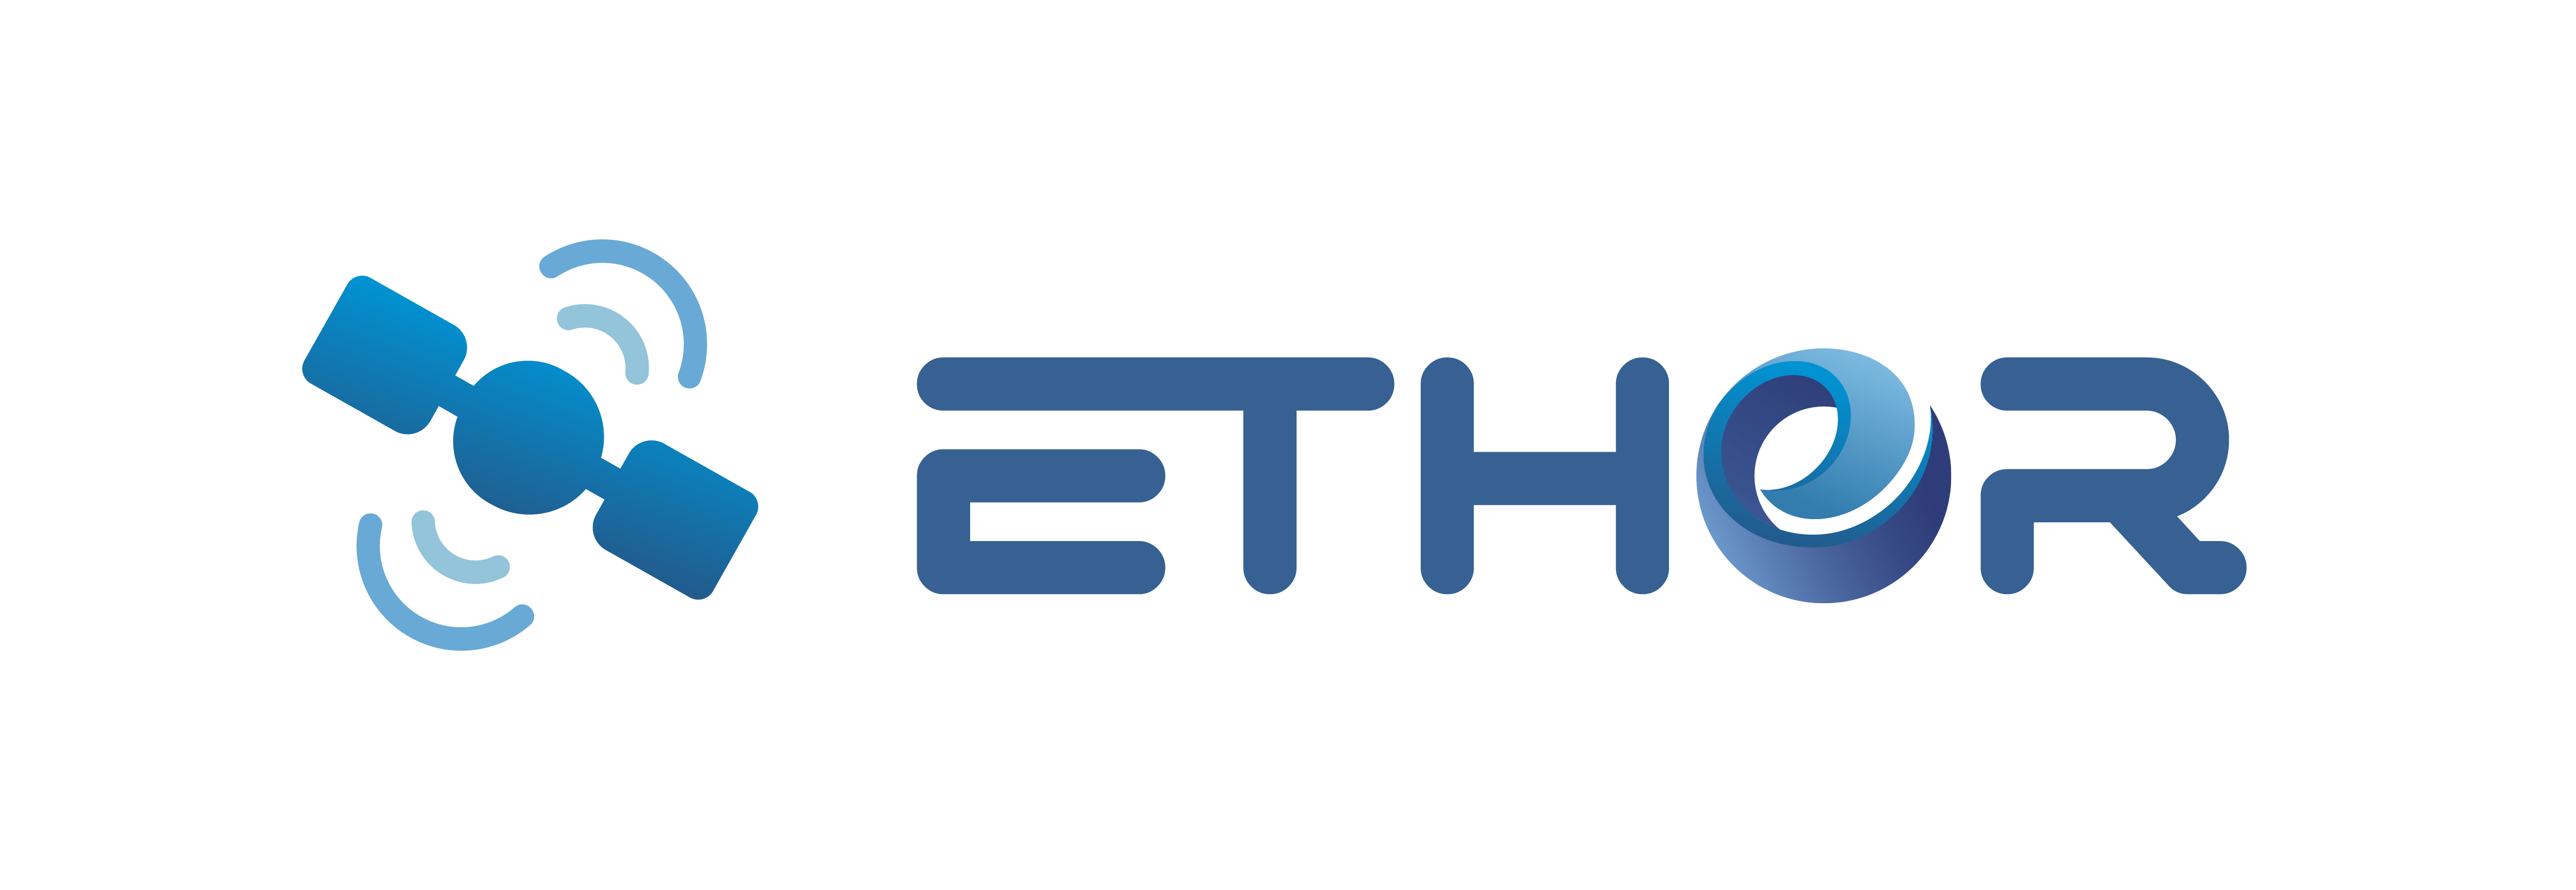 ETHER - extended logo